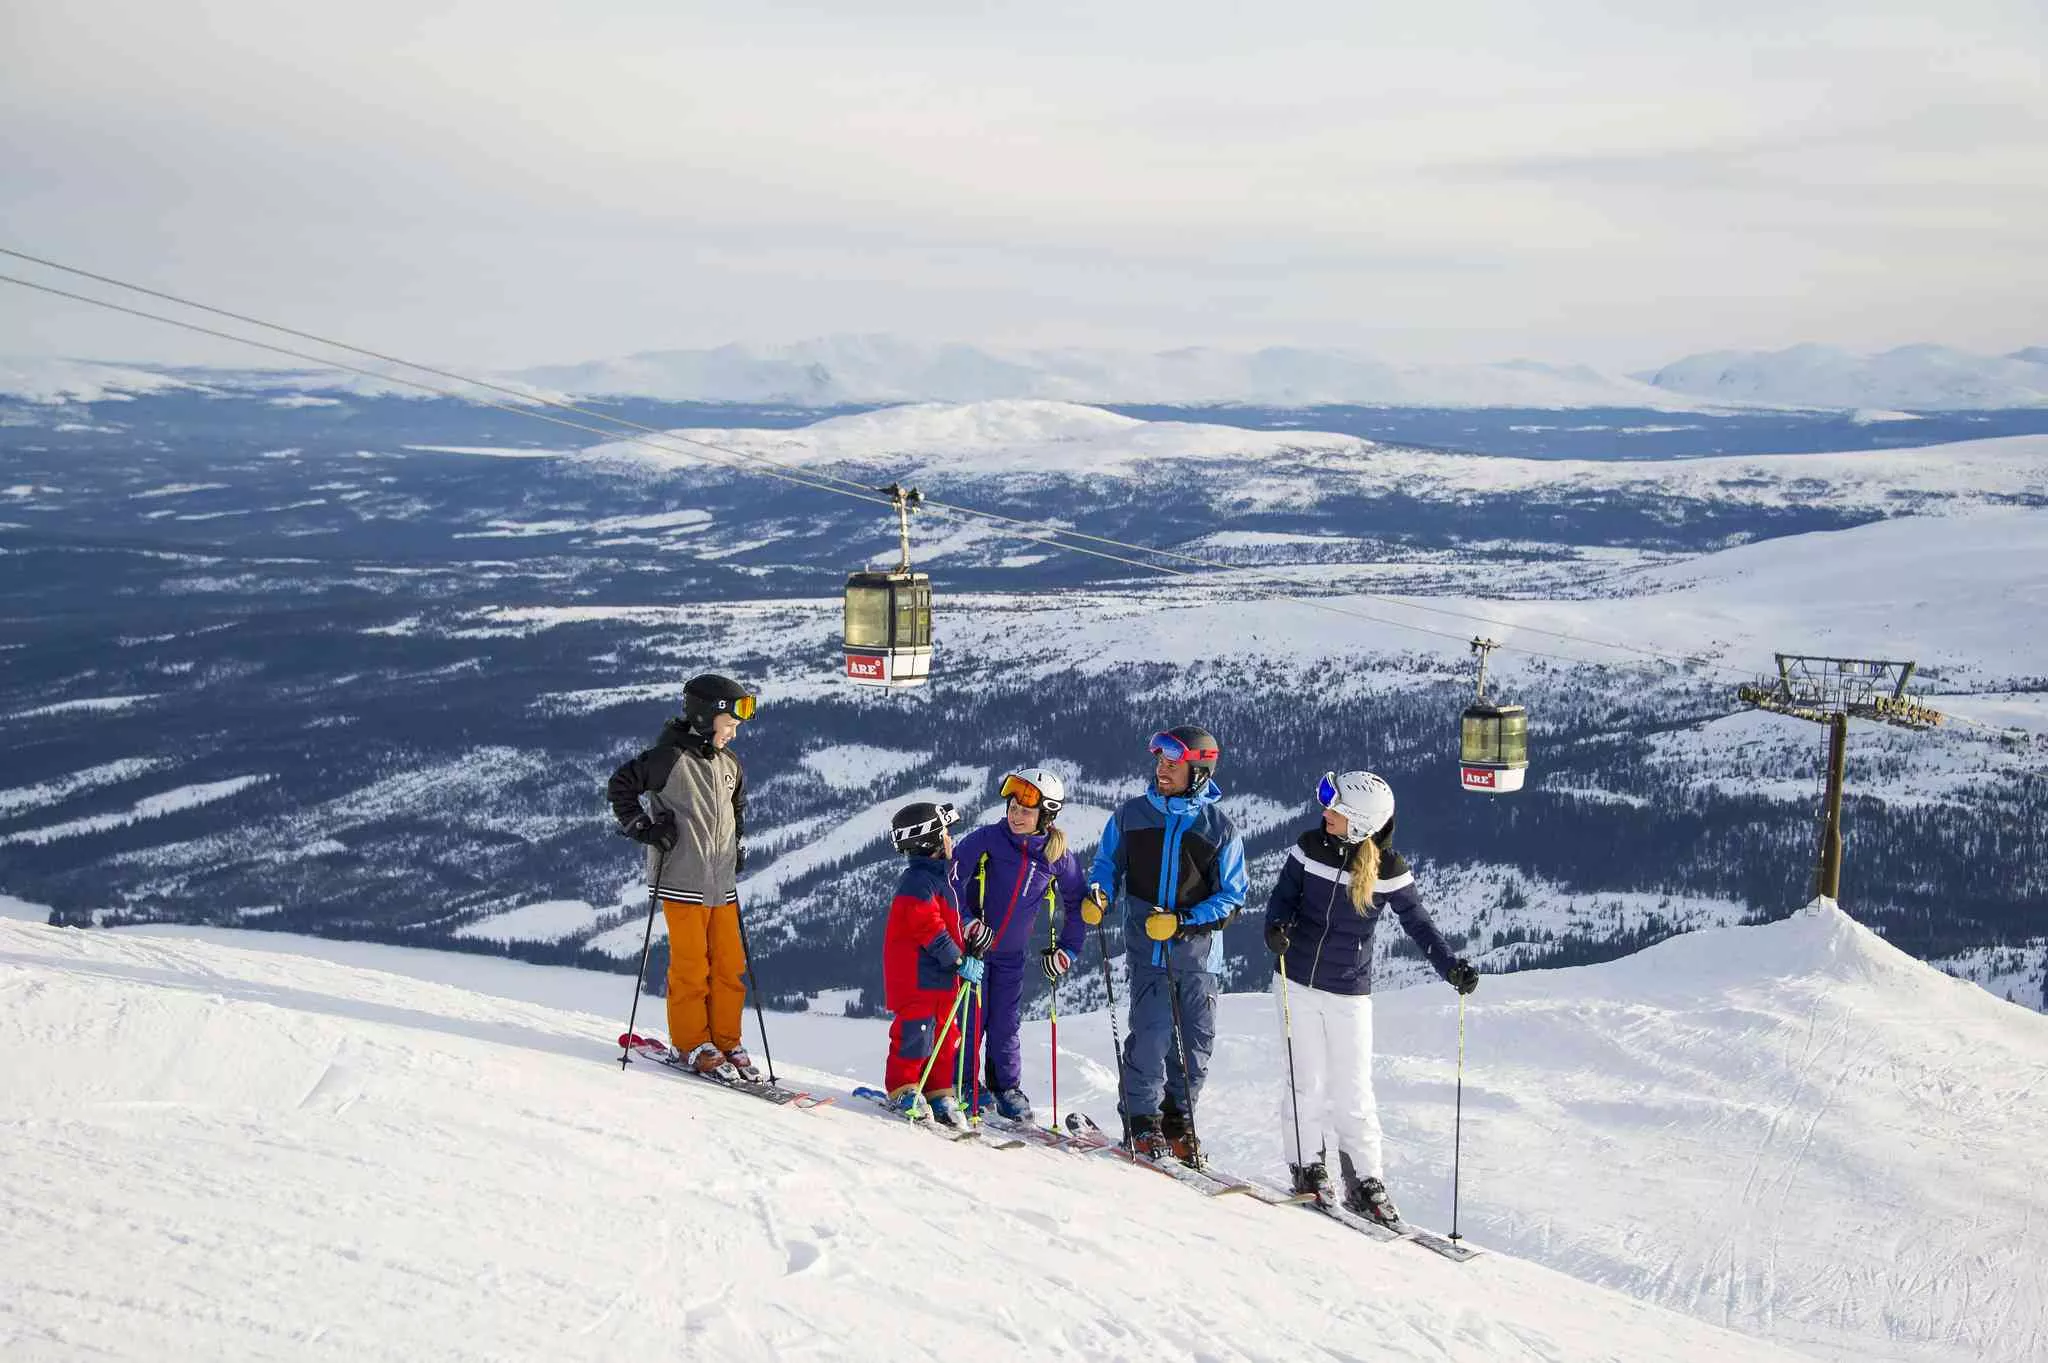 Persasen Skid in Sweden, Europe | Snowboarding,Skiing - Rated 0.9